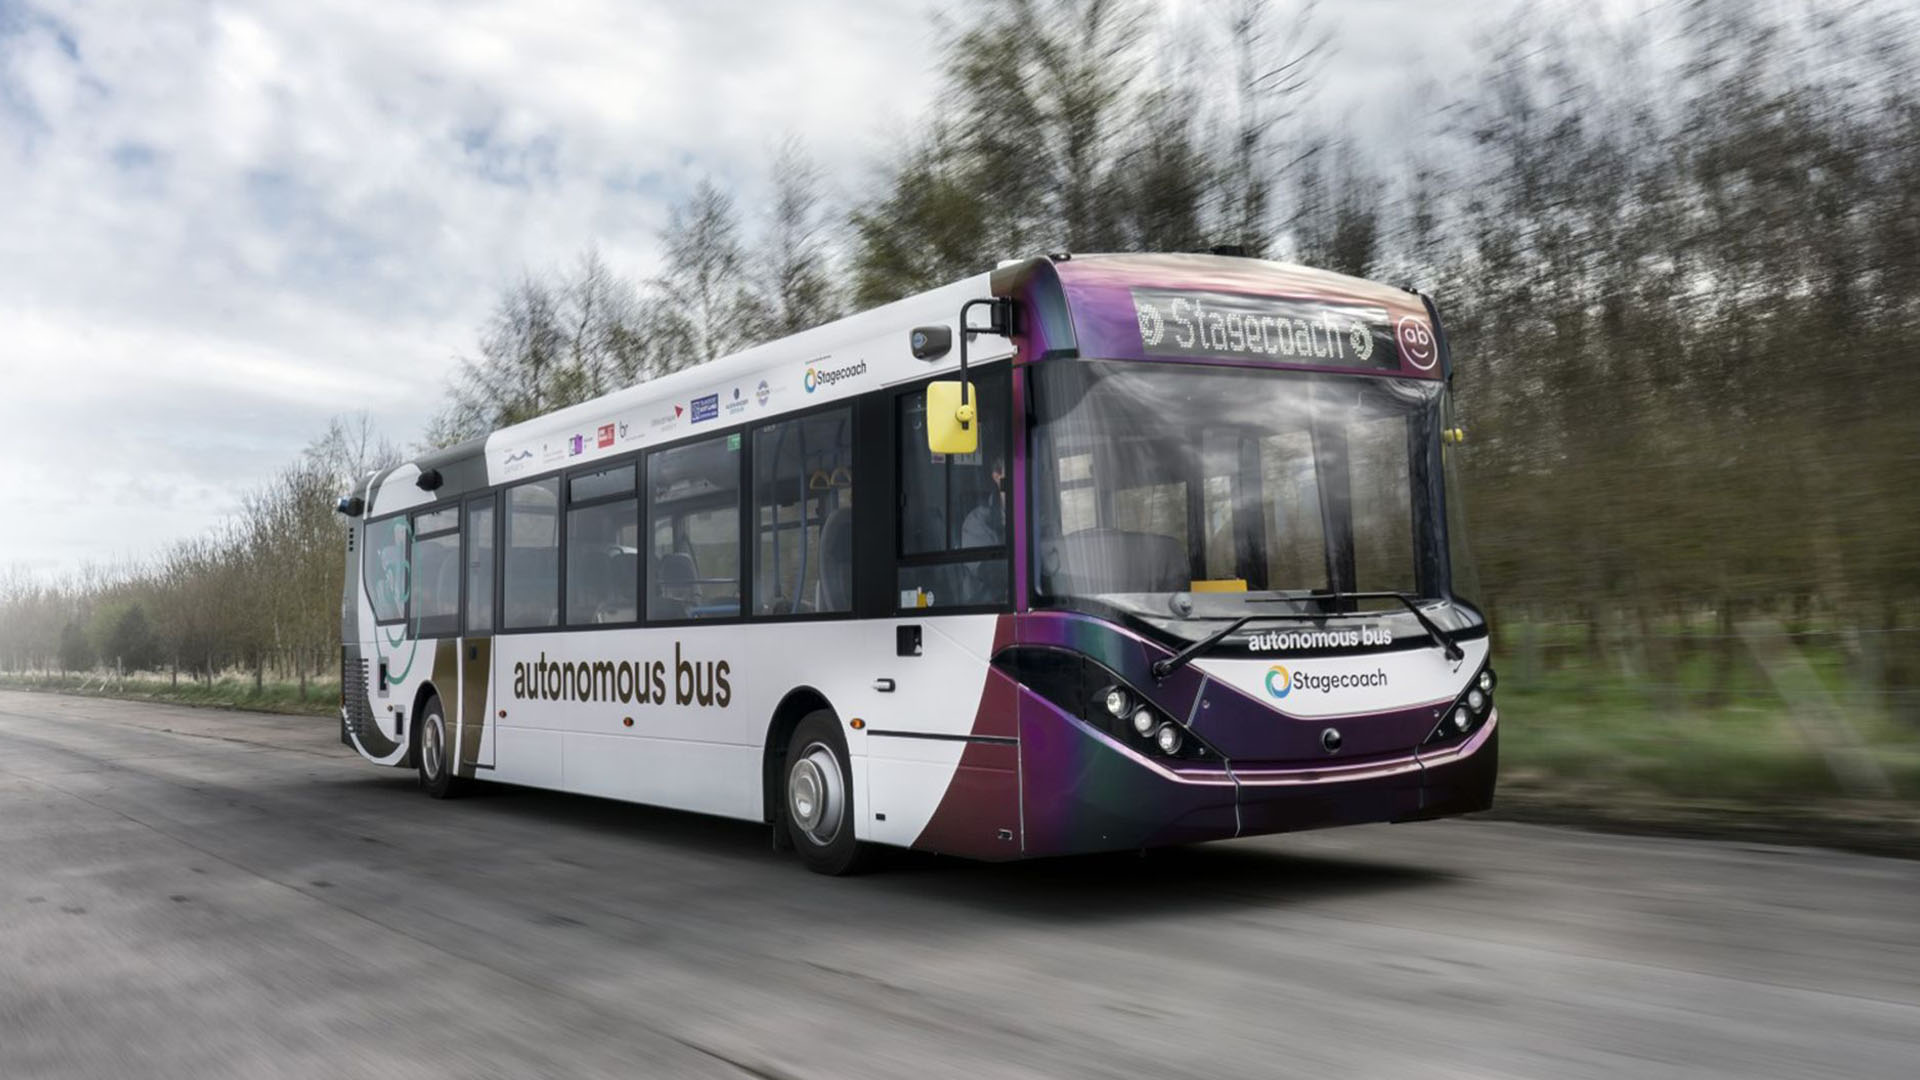 World's first autonomous bus service in Scotland